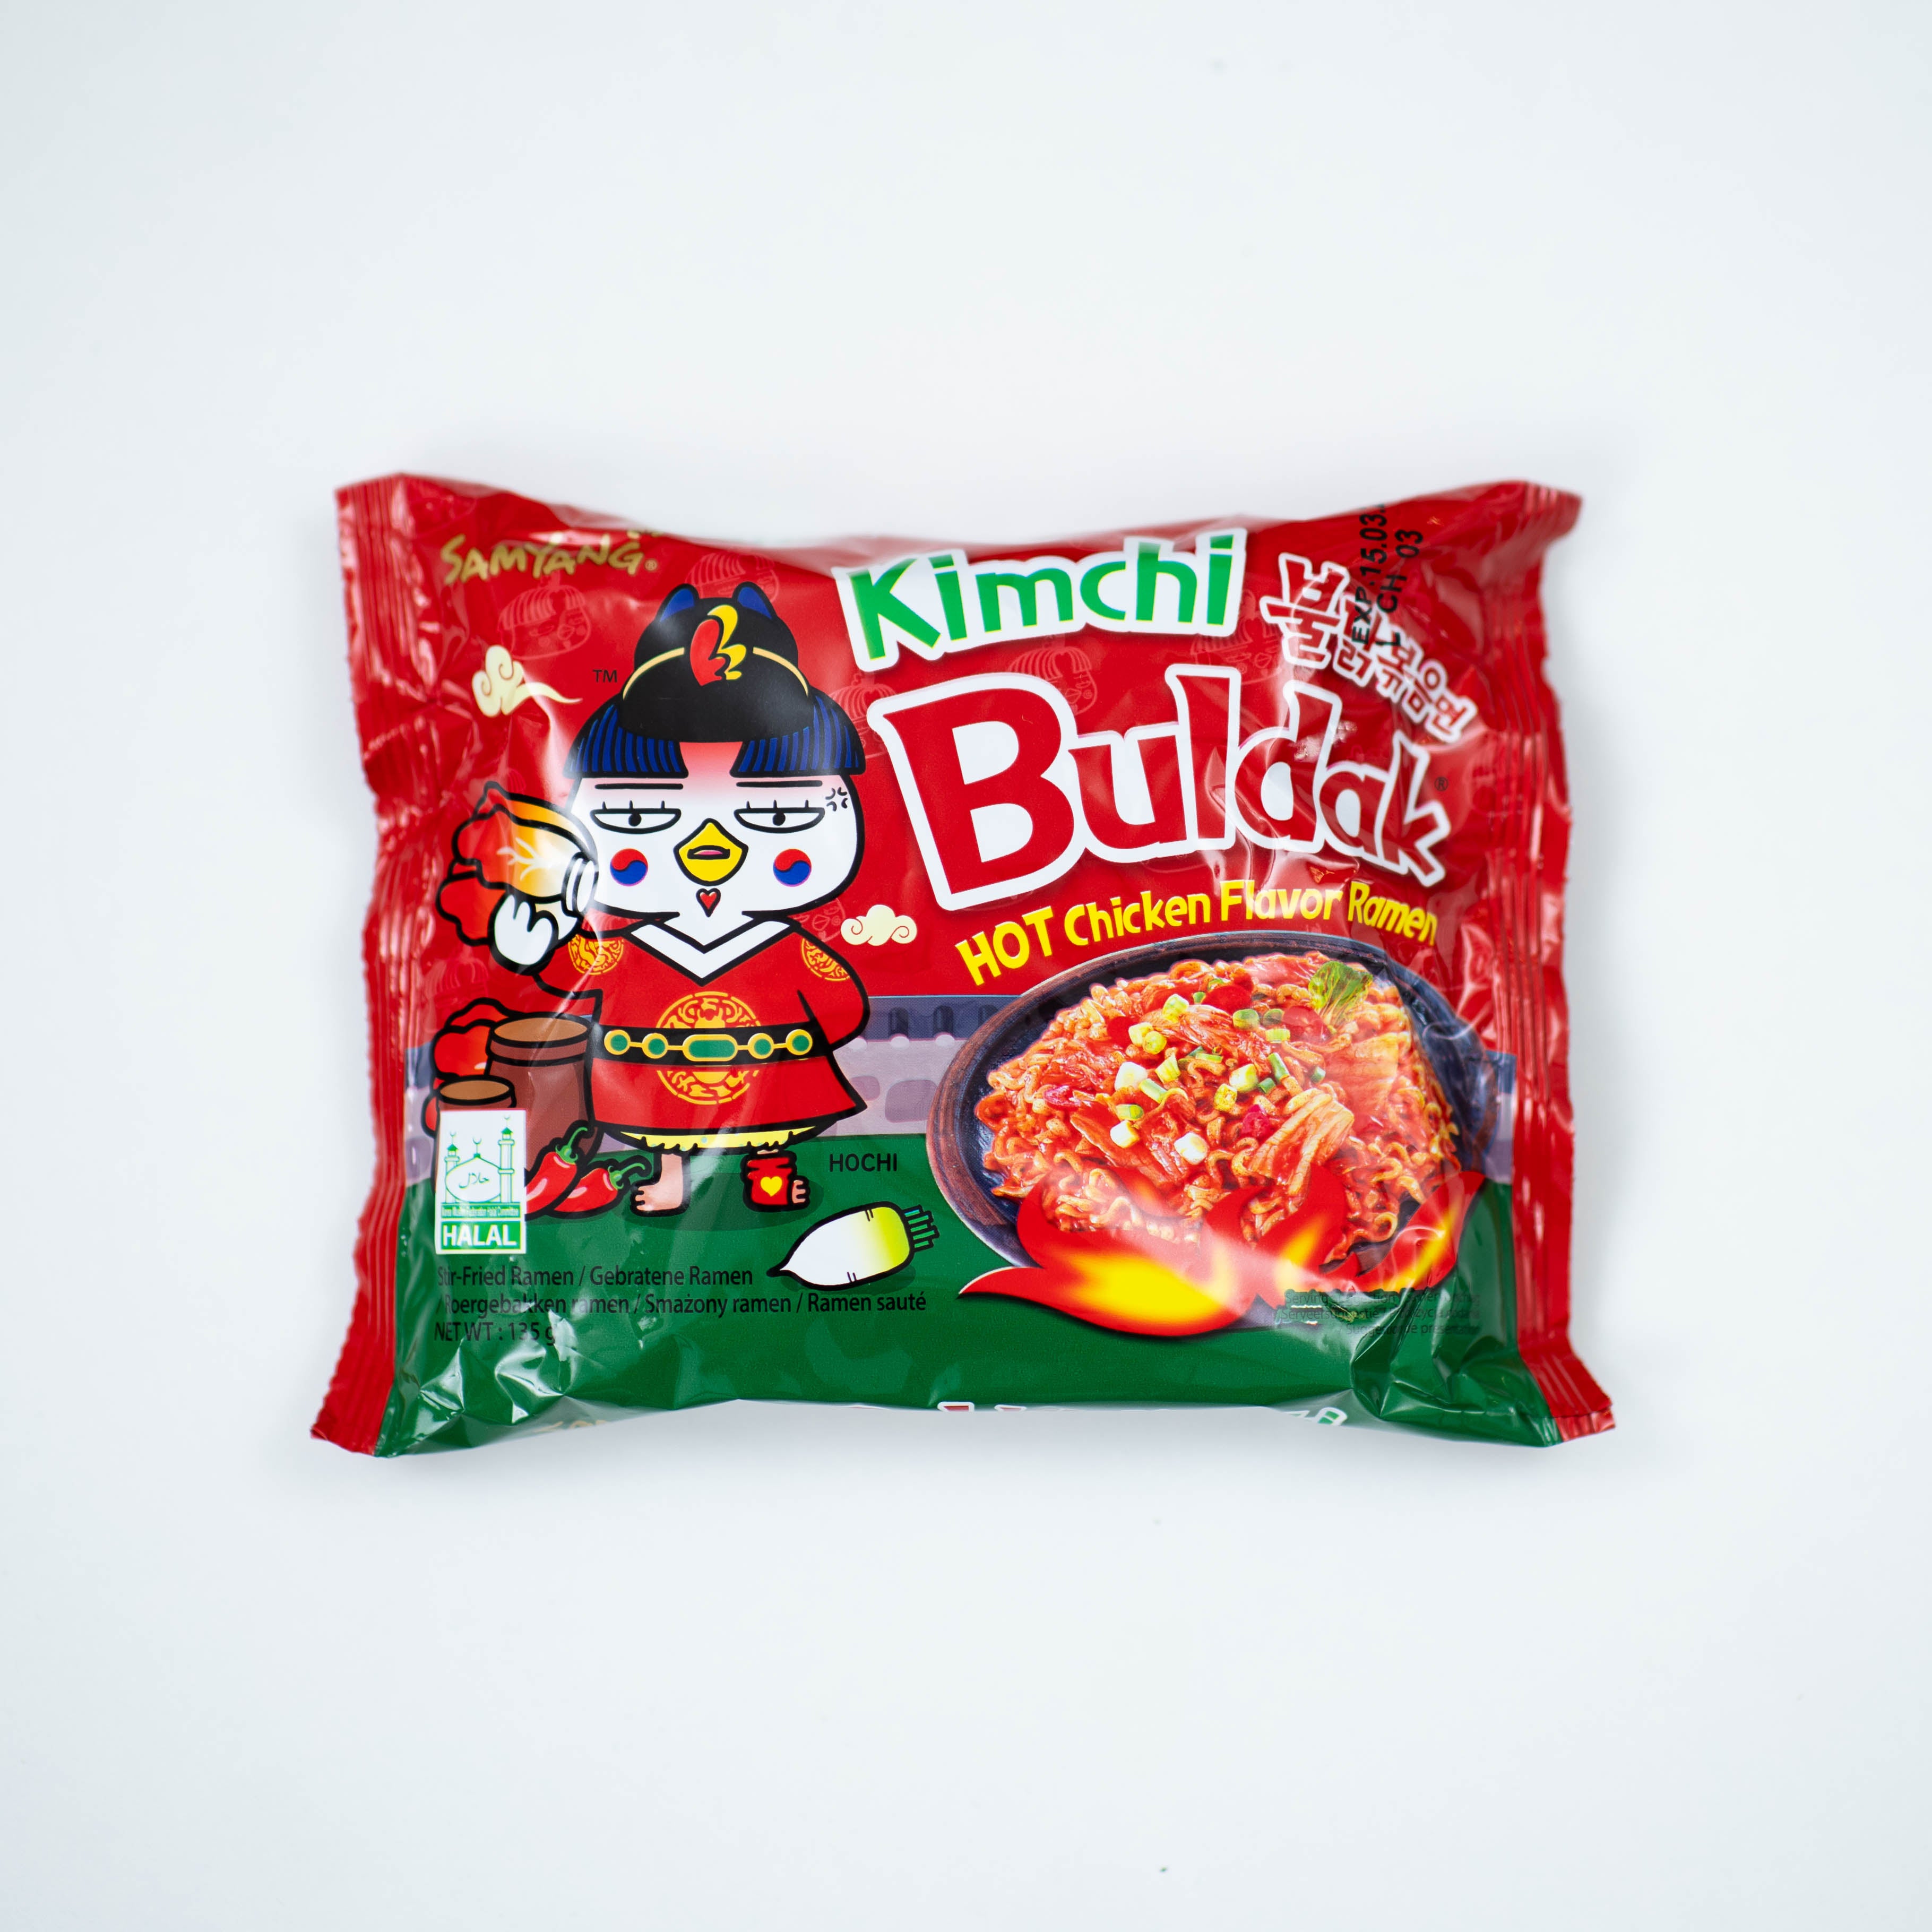 dinese.de kimchi ramen asiatische lebensmittel onlineshop asiashop samyang buldak